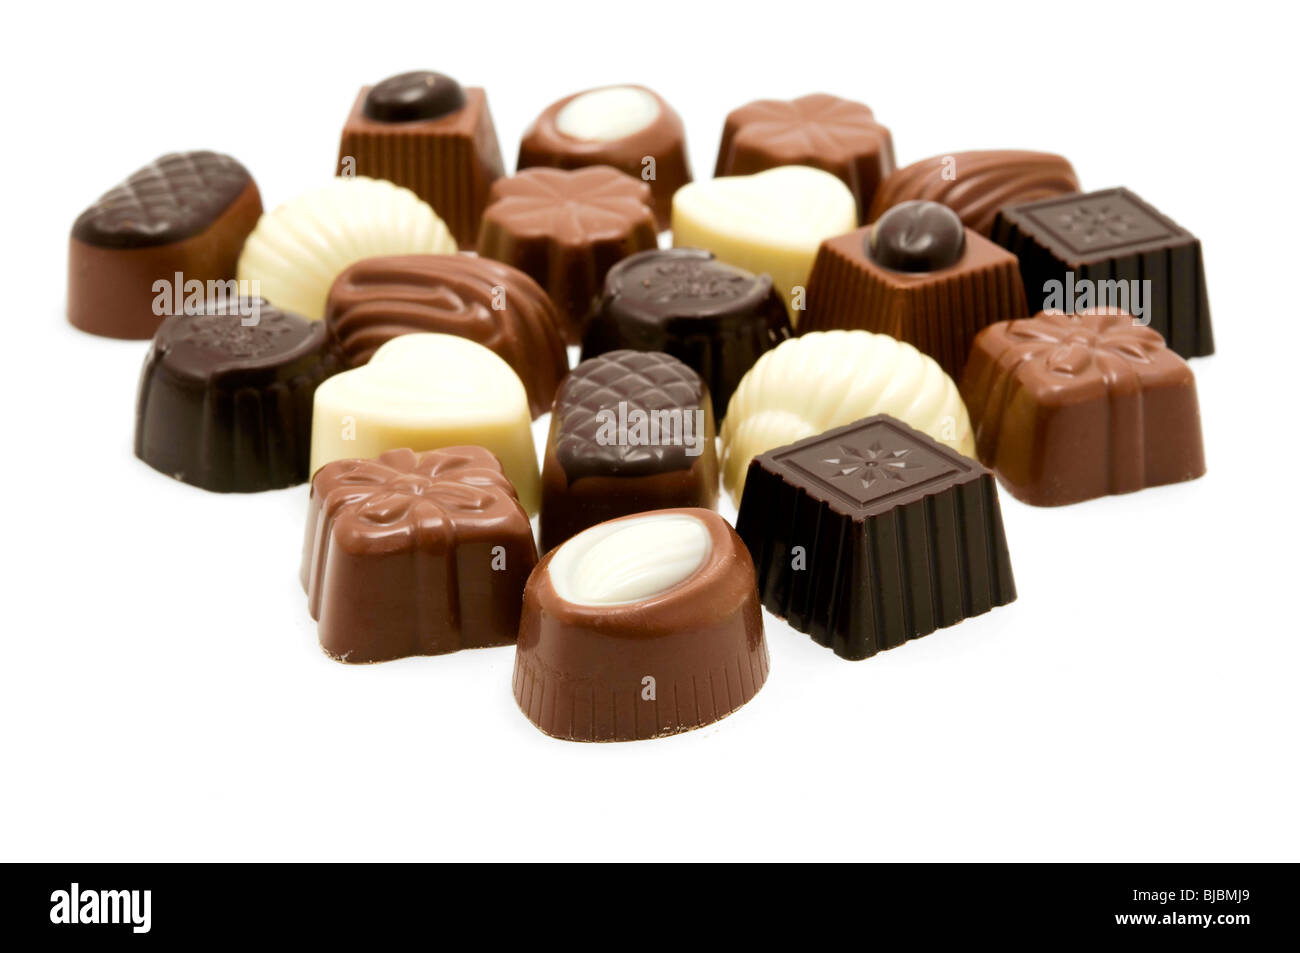 Chocolats belges image stock. Image du belge, chocolats - 15323623